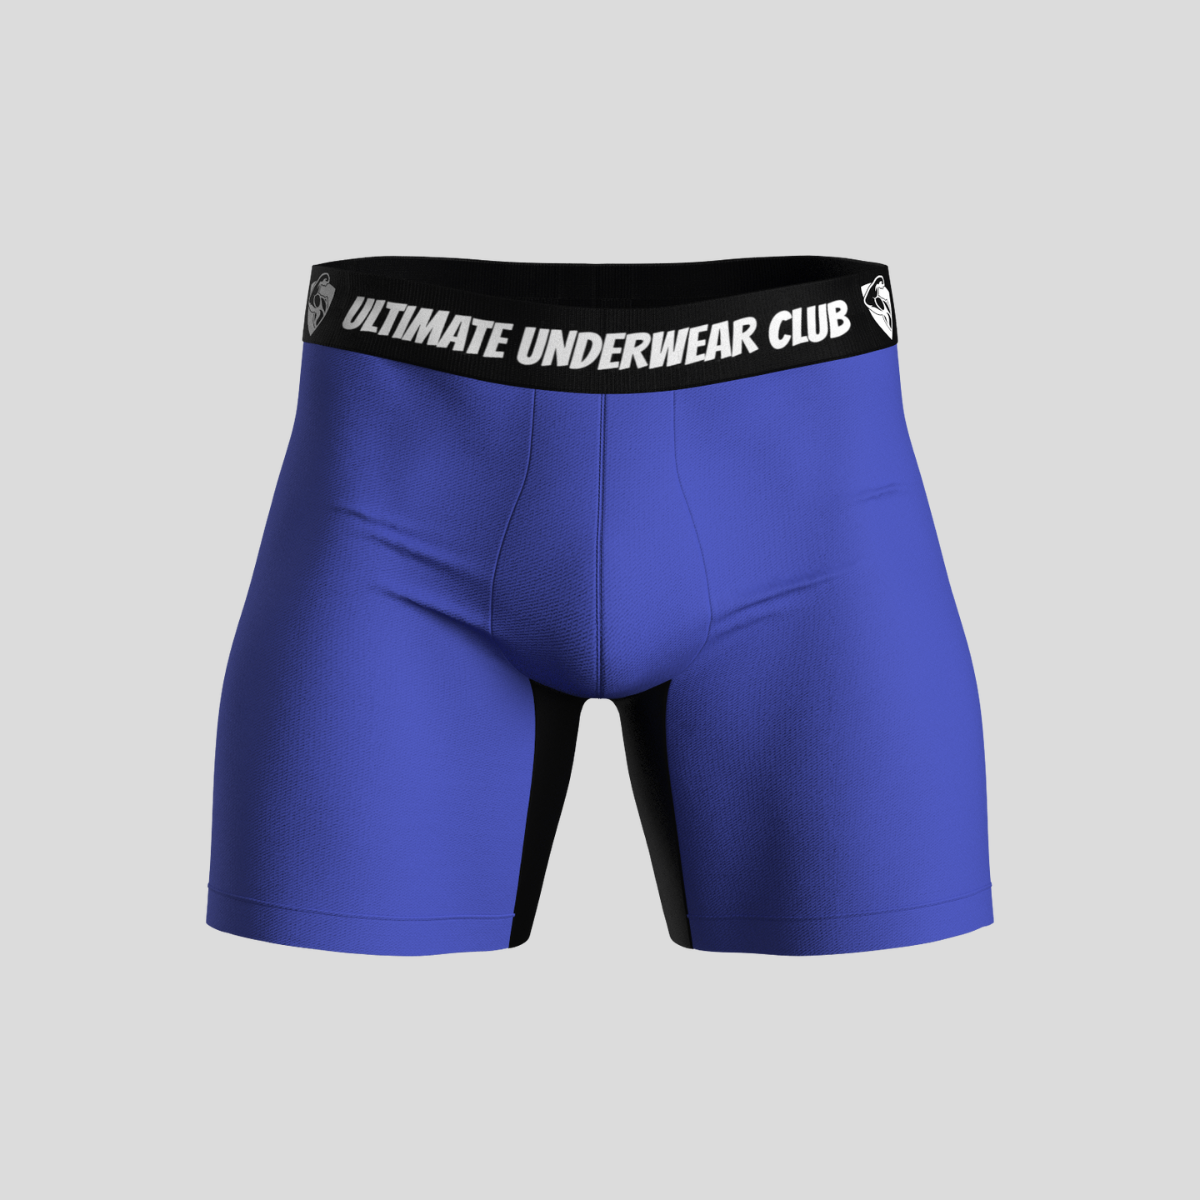 Blue Bamboo Boxer Brief Underwear for Men